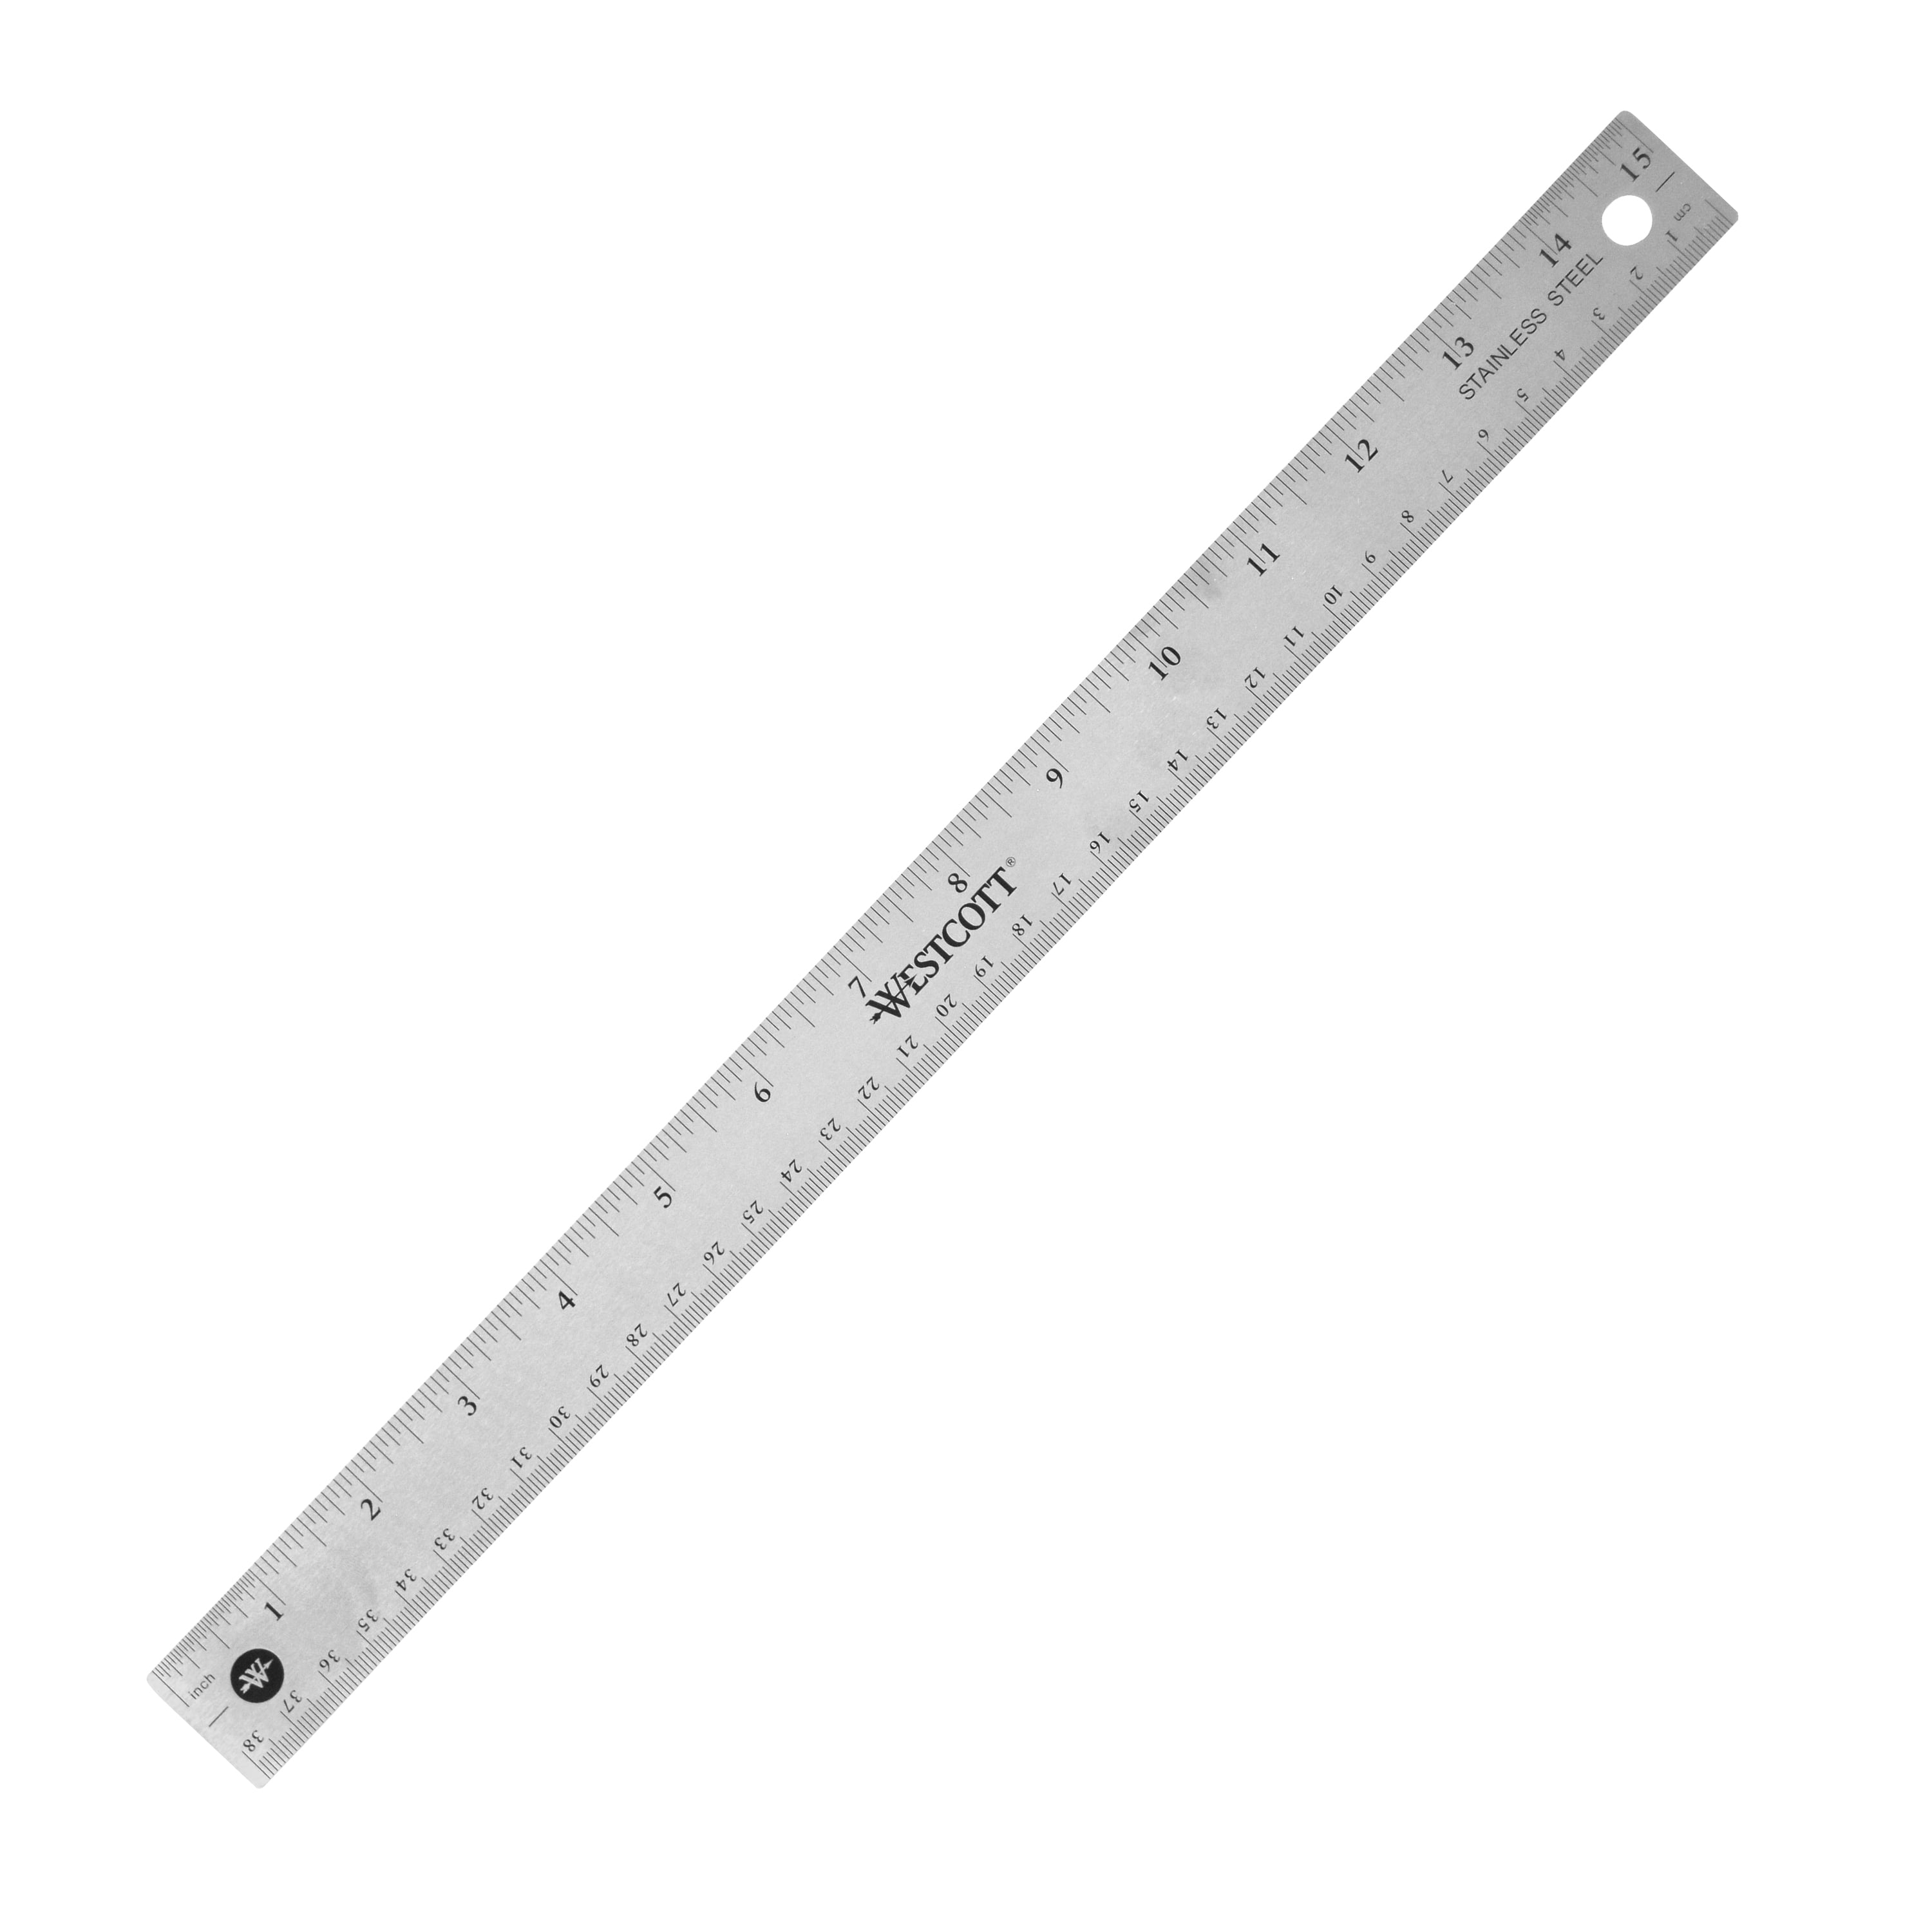  4pcs Set Cutting Ruler Clear Plastic Ruler Yard Stick